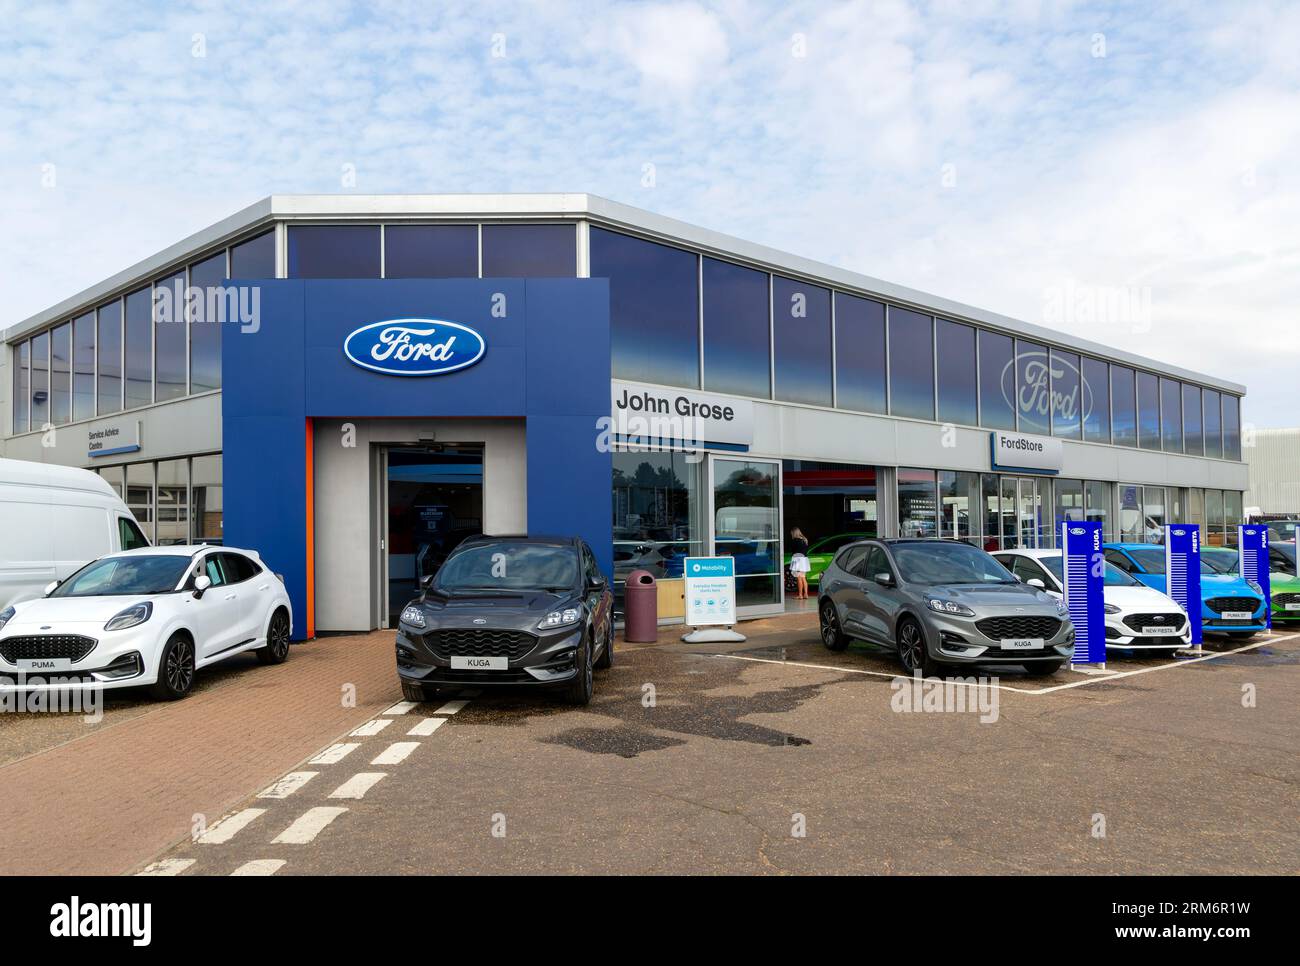 John Grose Ford car dealership, Ransomes industrial estate, Ipswich, Suffolk, England, UK Stock Photo